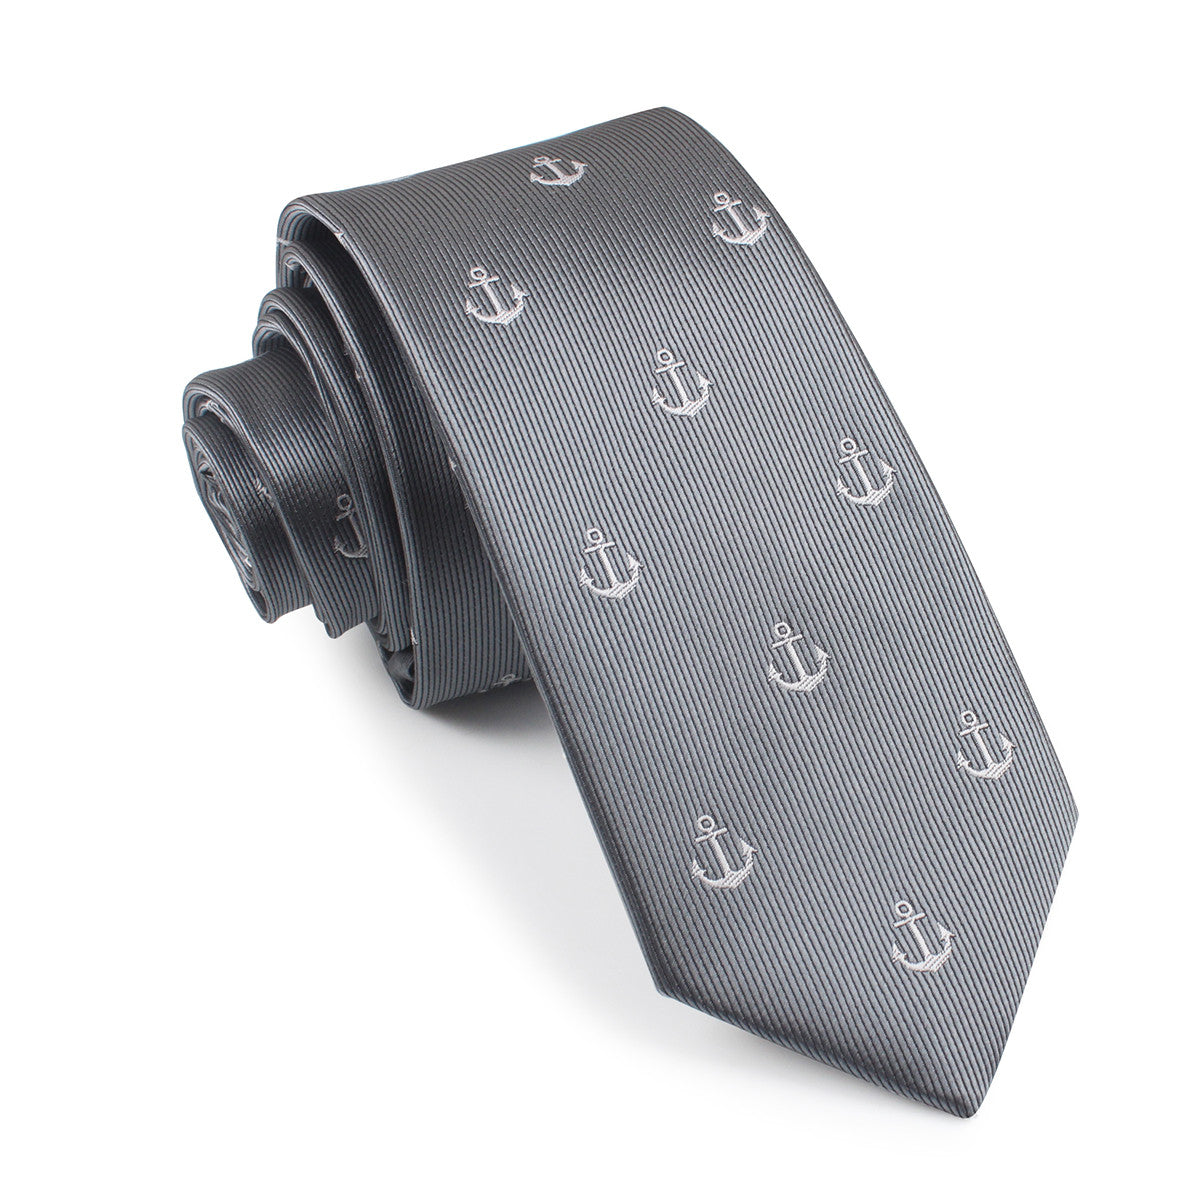 The OTAA Charcoal Grey Anchor Skinny Tie